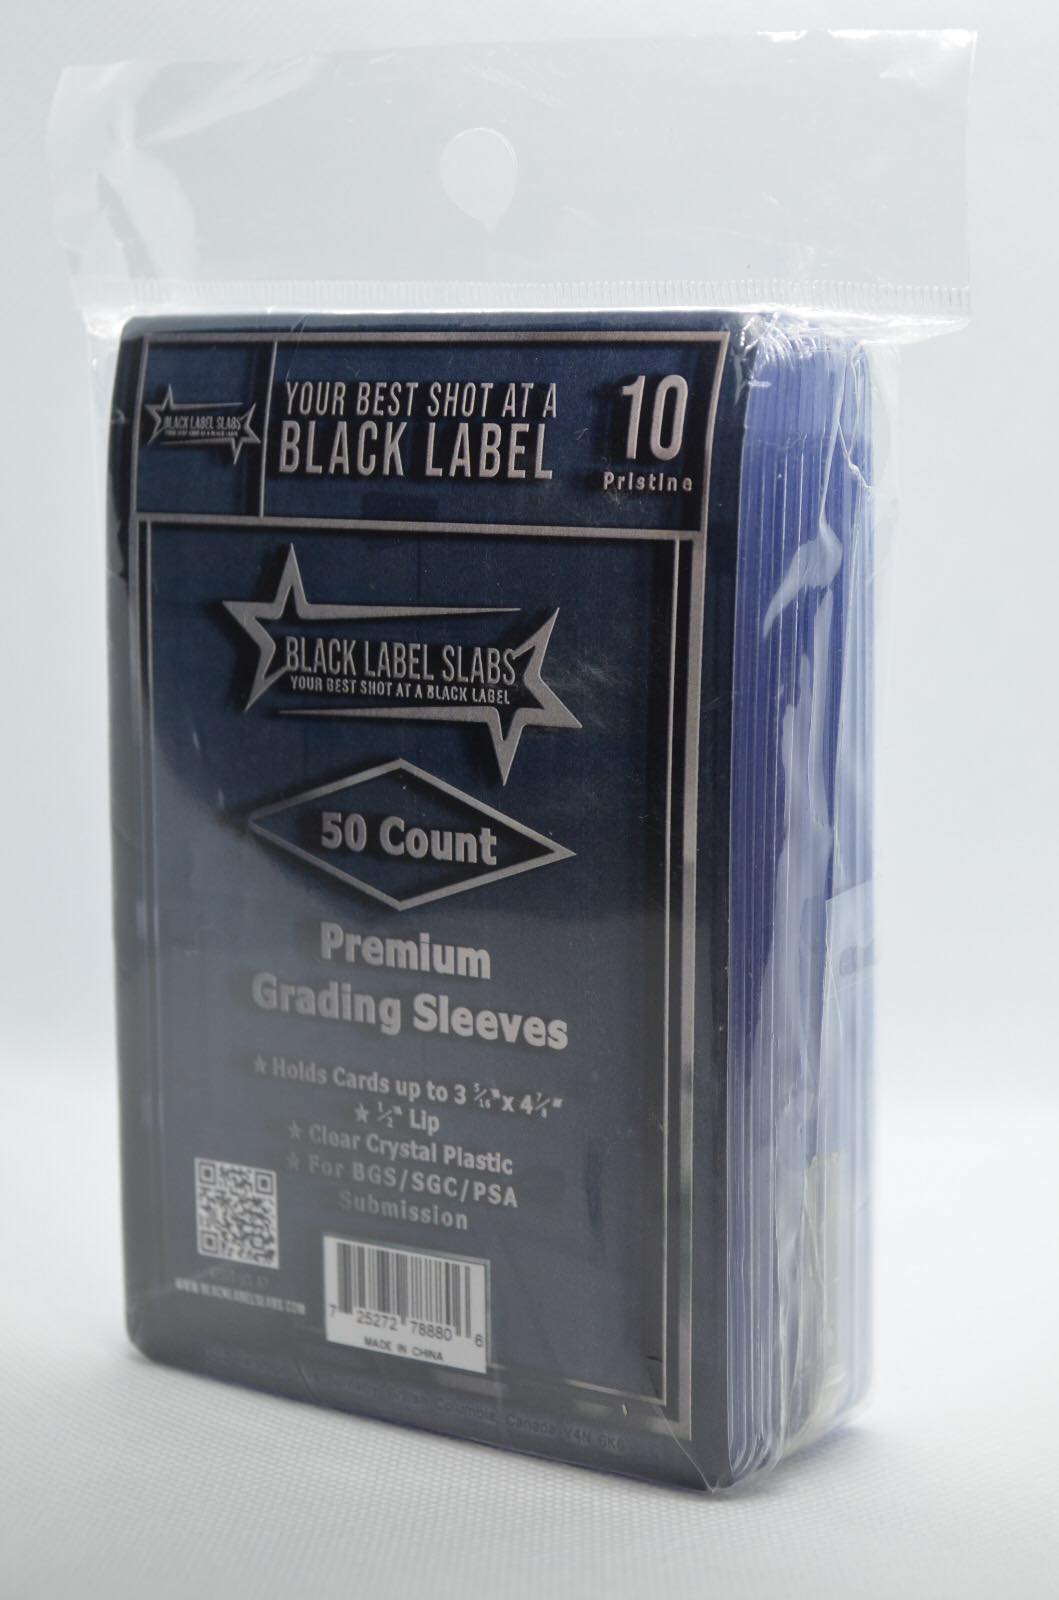 Black Label Slabs Premium Grading Sleeves - 50 Count